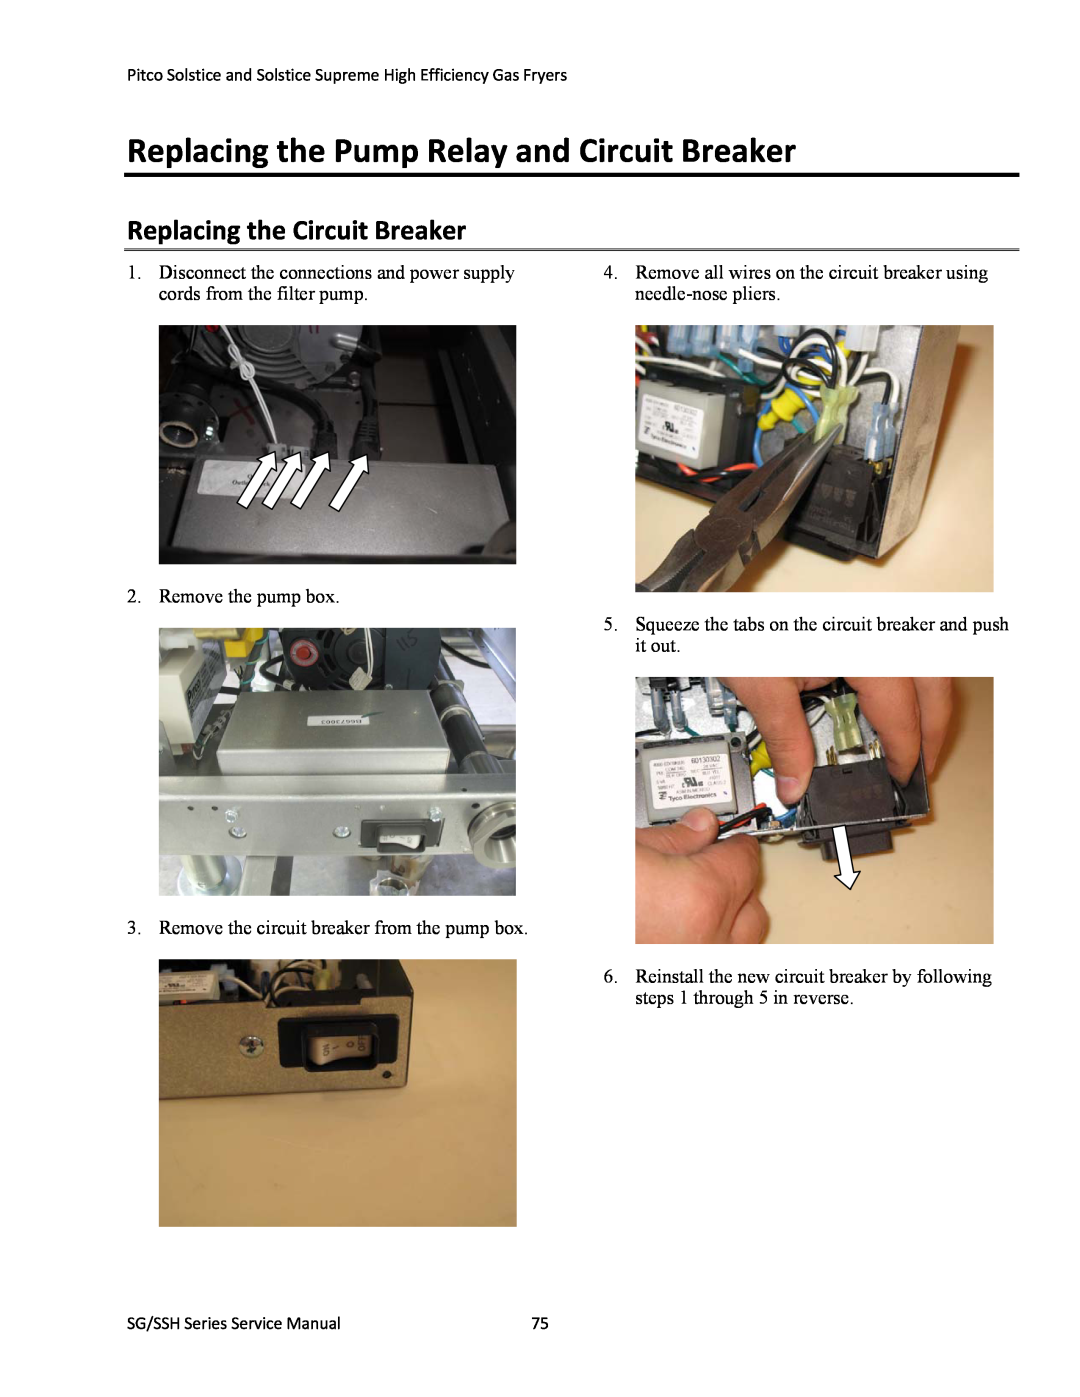 Pitco Frialator L22-345 manual Replacing the Pump Relay and Circuit Breaker, Replacing the Circuit Breaker 